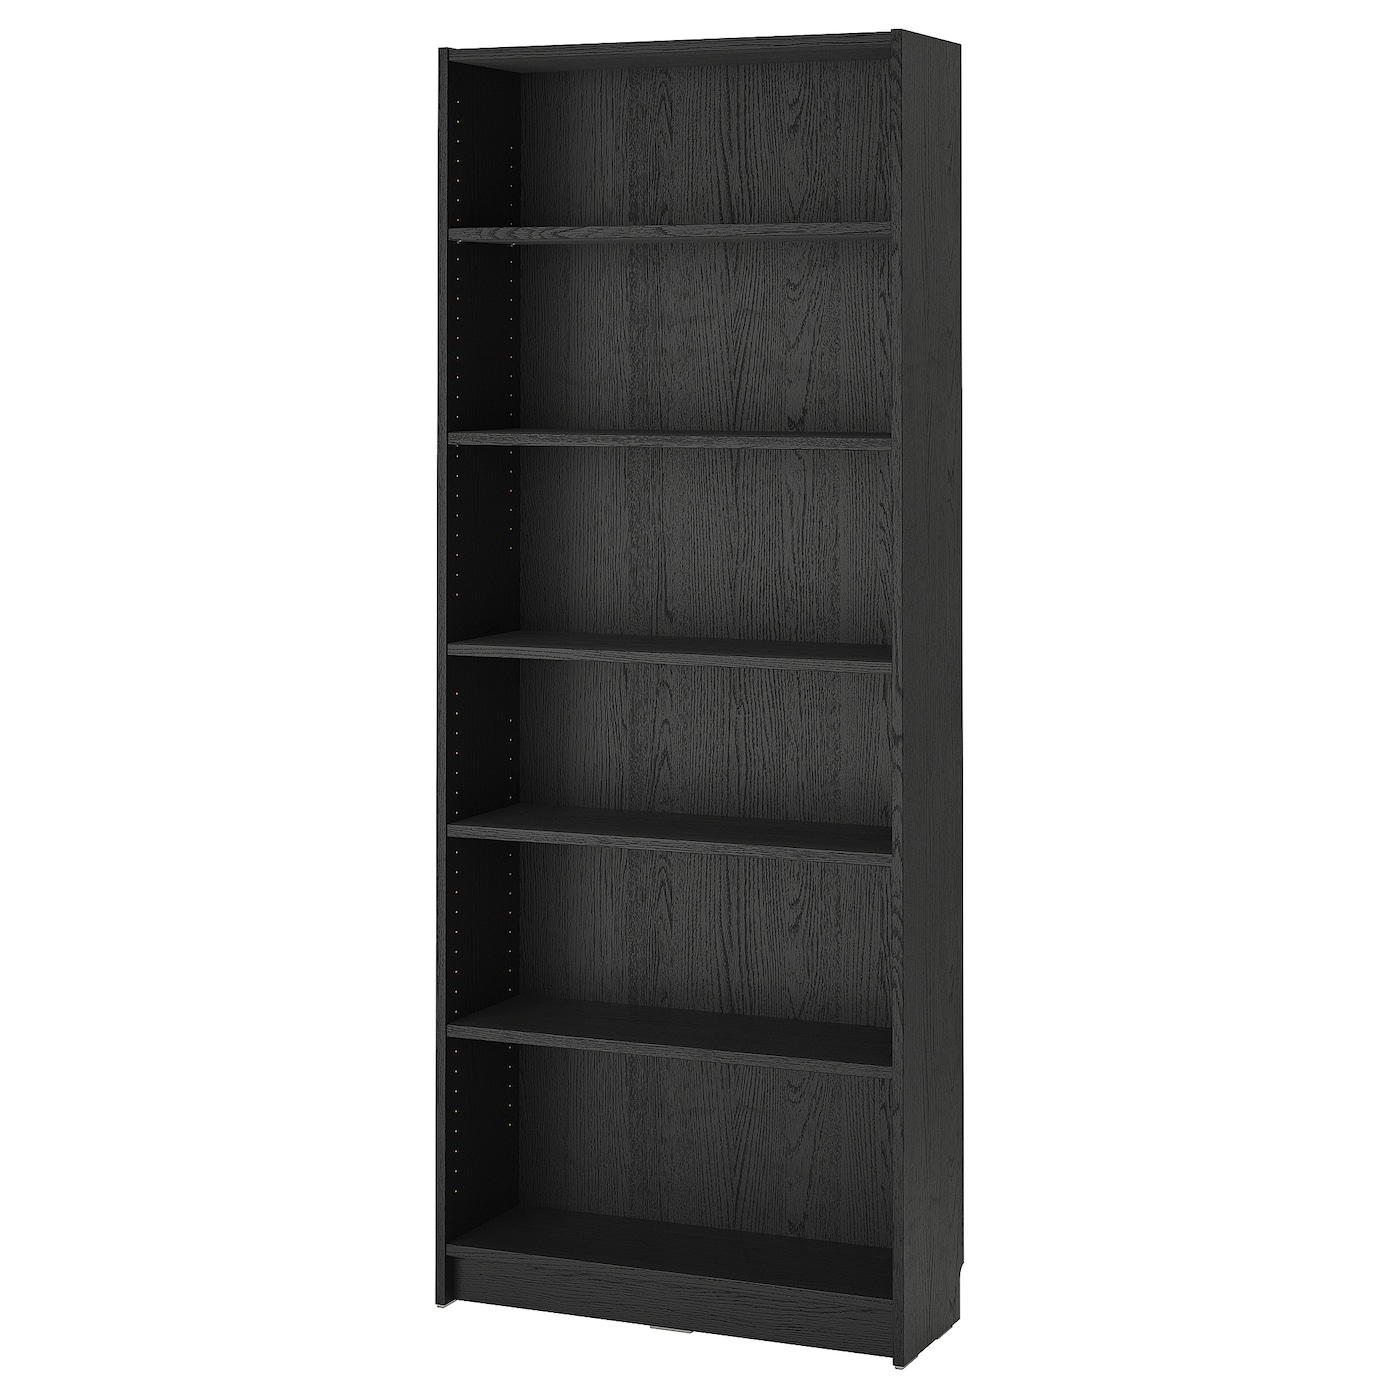 Стеллаж - IKEA BILLY, 80х28х202 см, черный/имитация дуба, БИЛЛИ ИКЕА